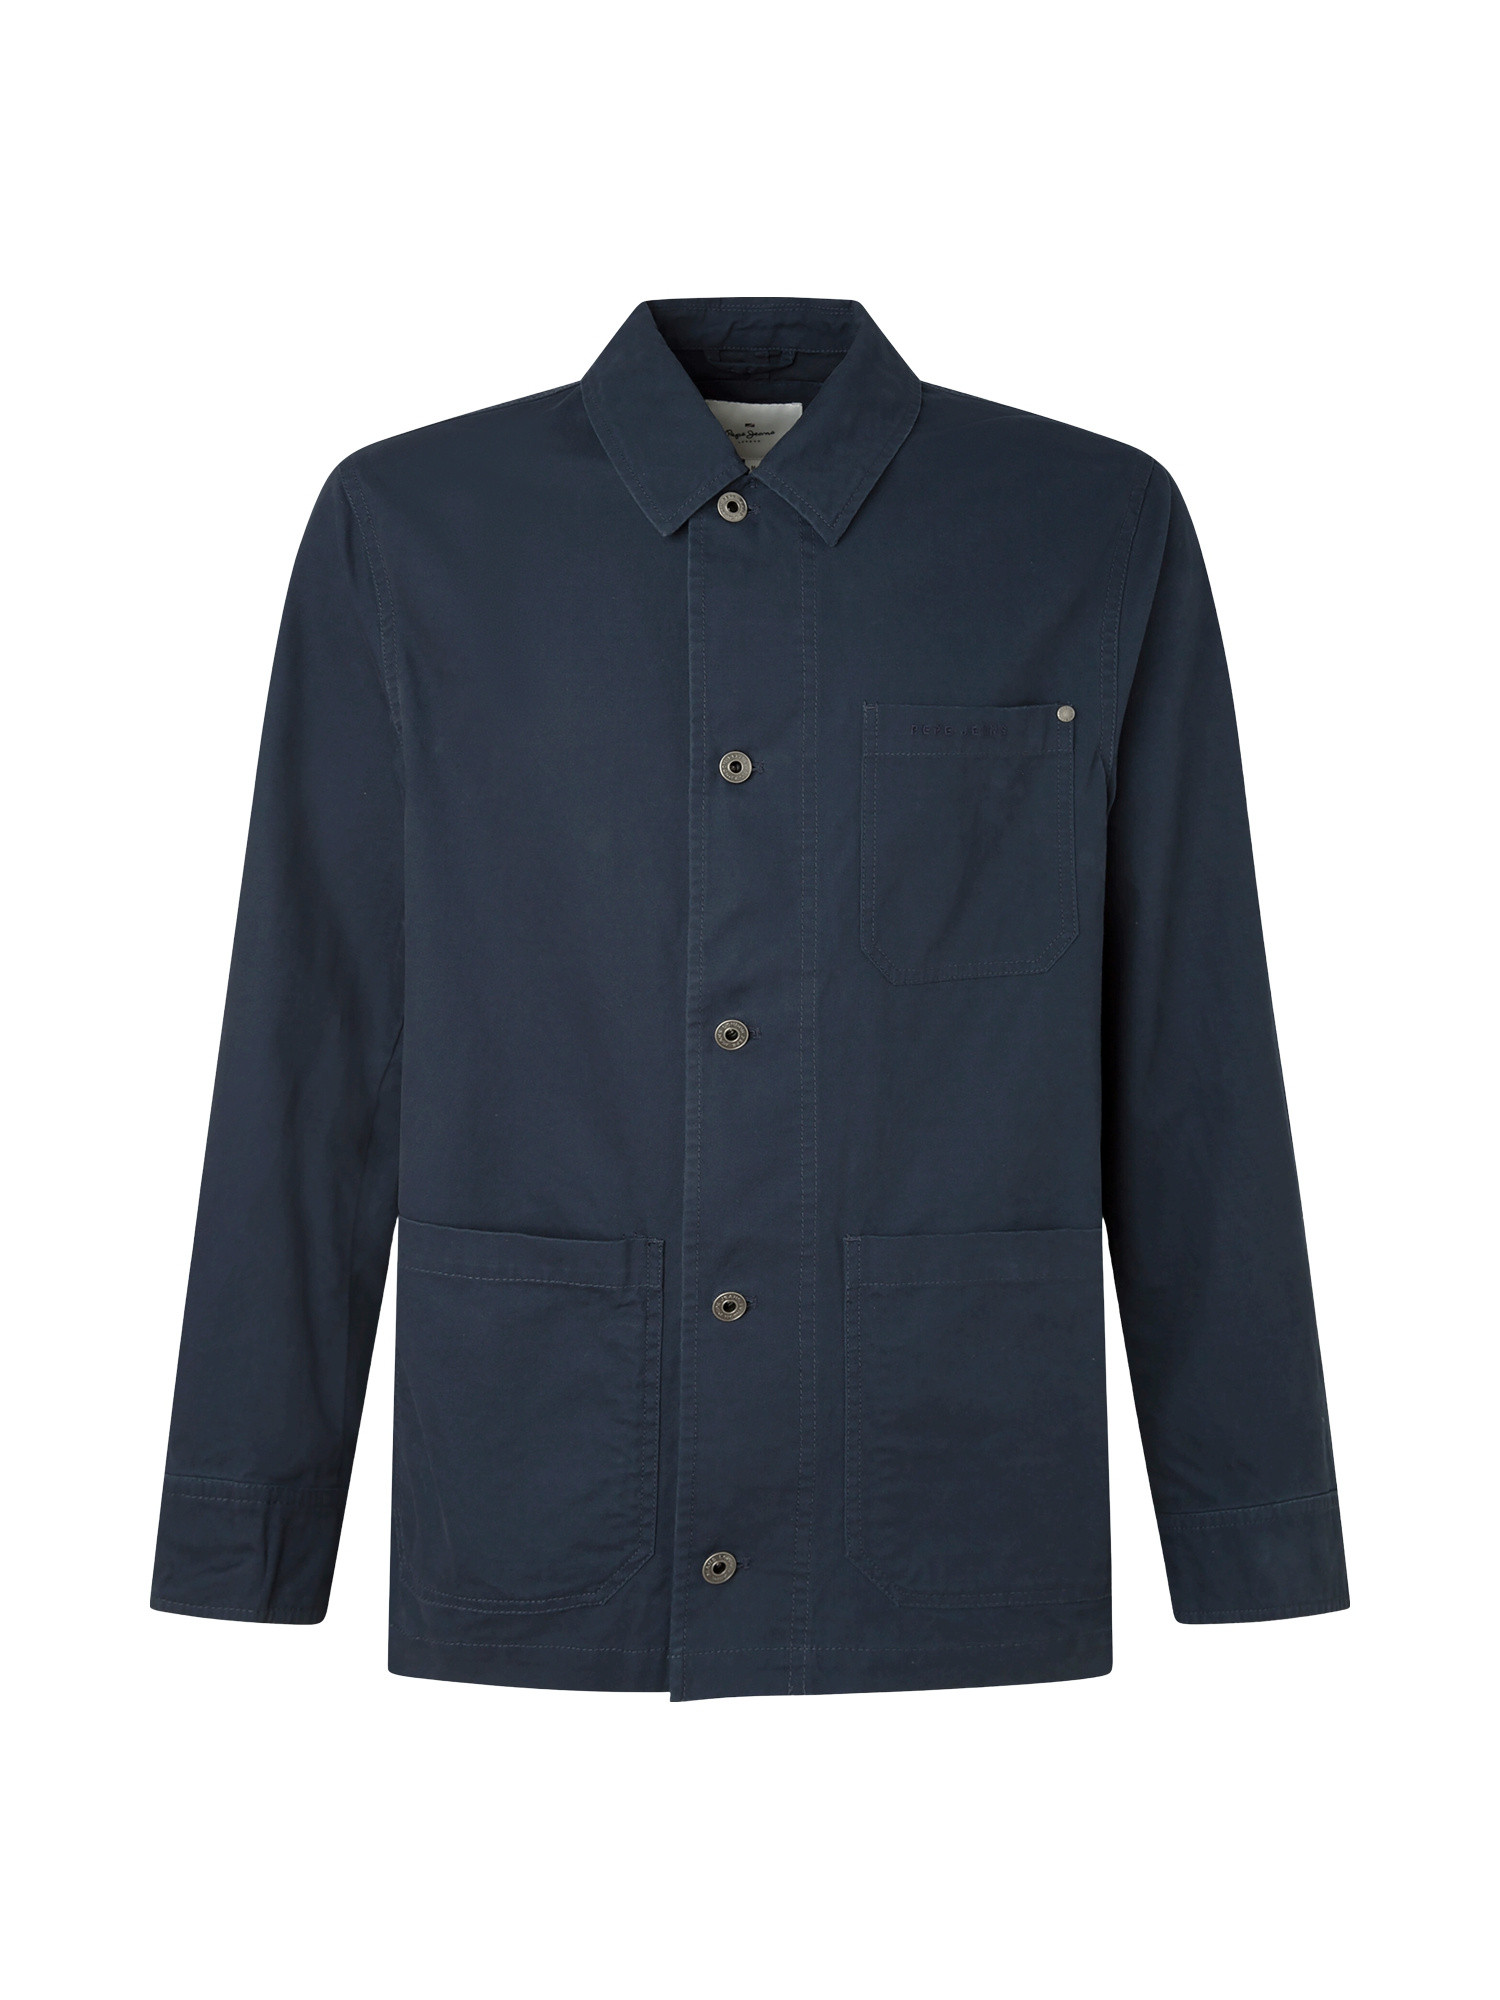 Pepe Jeans - Cotton jacket, Dark Blue, large image number 0